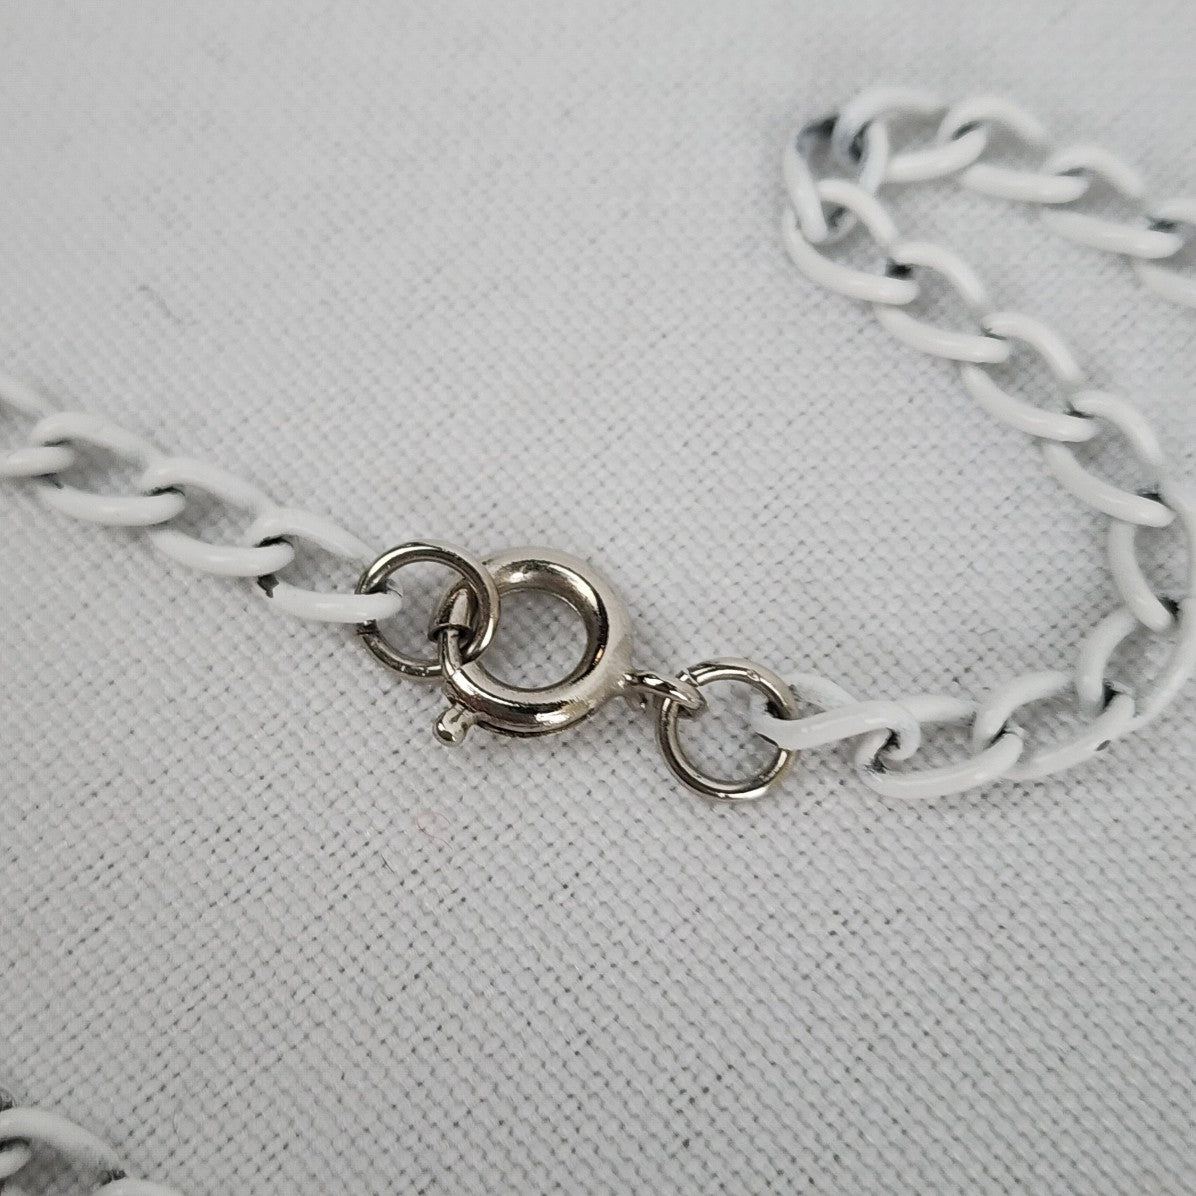 Vintage White Enamel Pendant Necklace